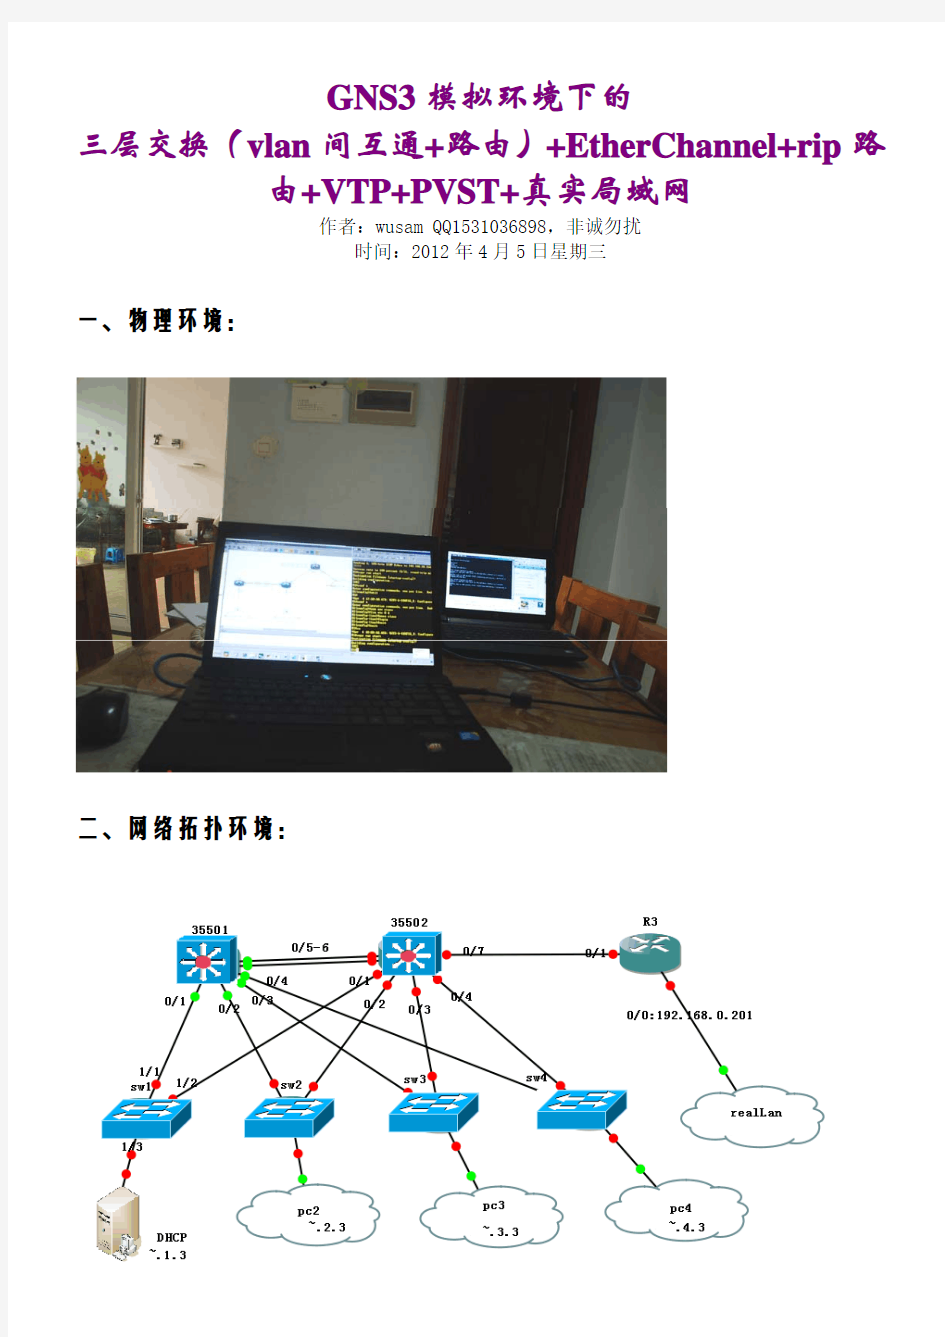 GNS3模拟环境三层交换(vlan间互通+路由)+EtherChannel+rip路由+VTP+PVST+真实局域网